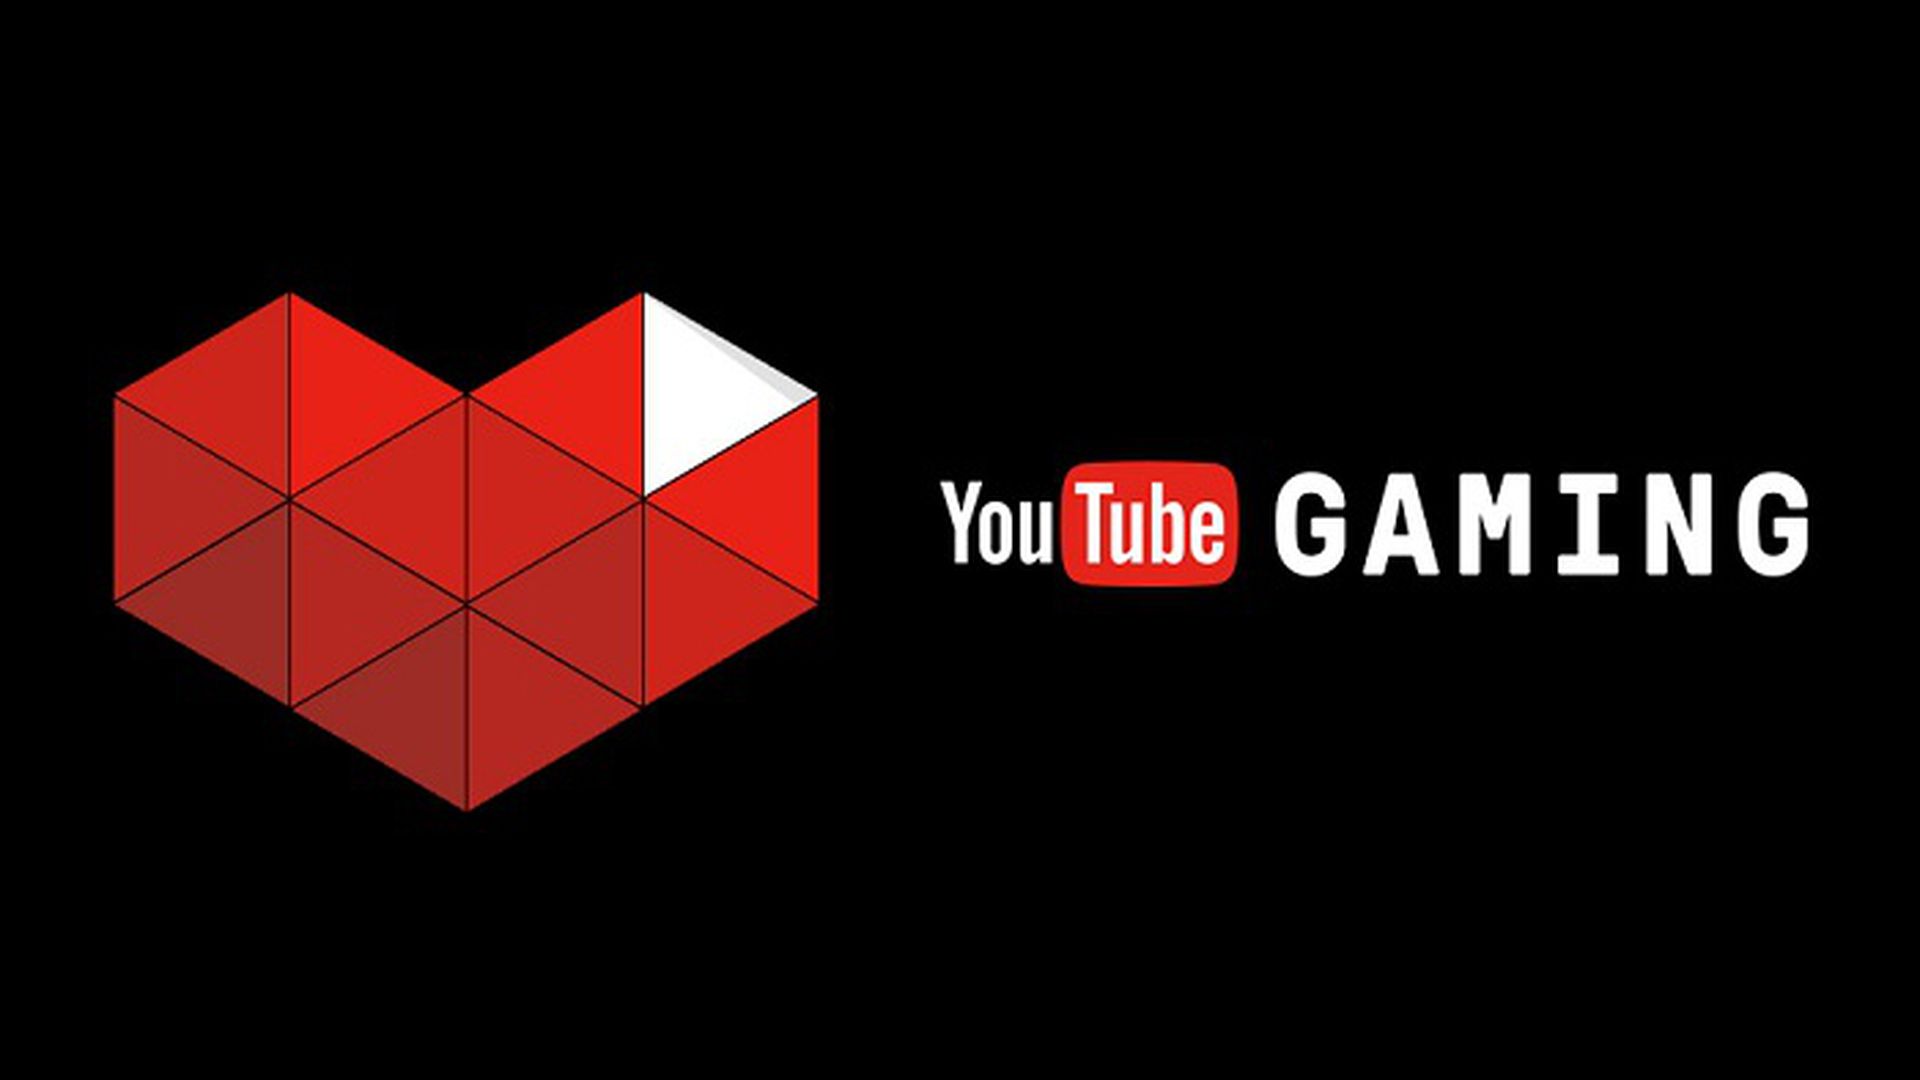 Https gaming youtube. Youtube Gaming. Логотип youtube Gaming. Игровые ютуб. GAGAMING - youtube.